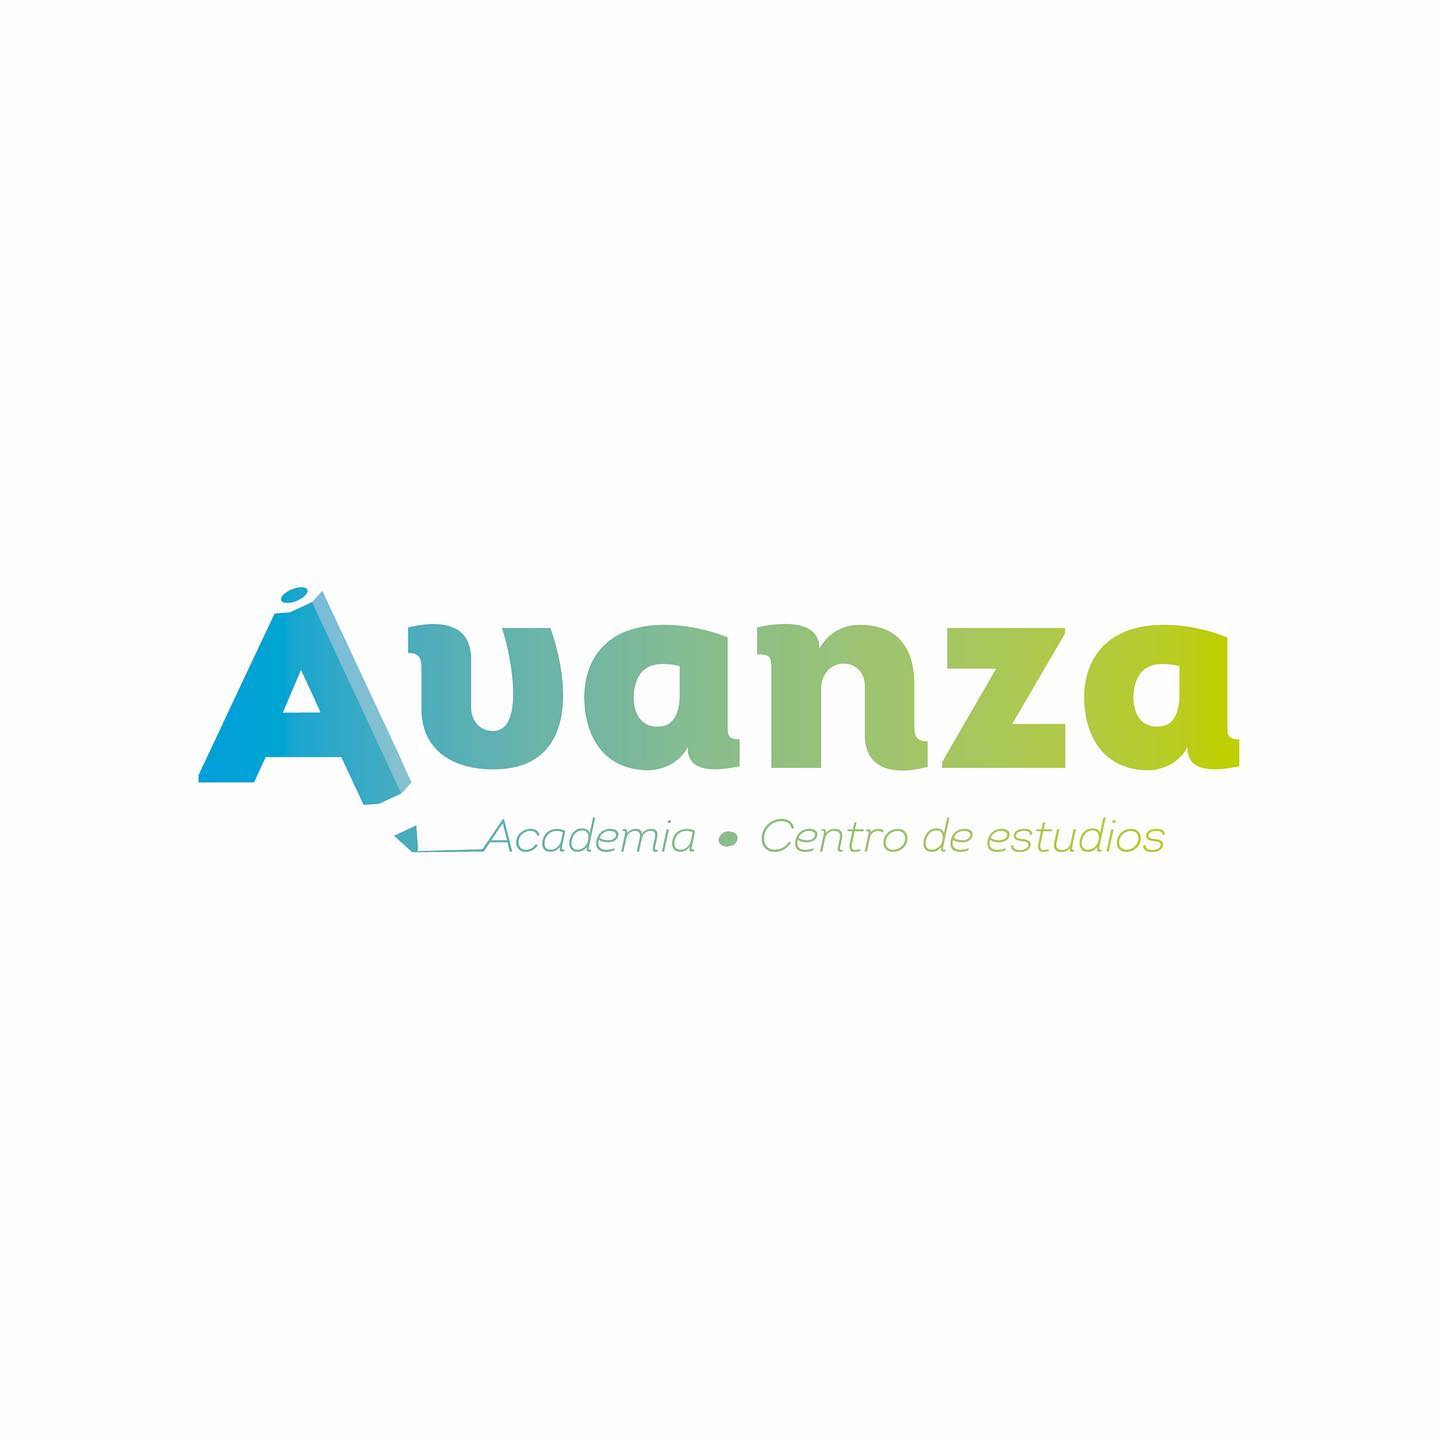 Academia Avanza